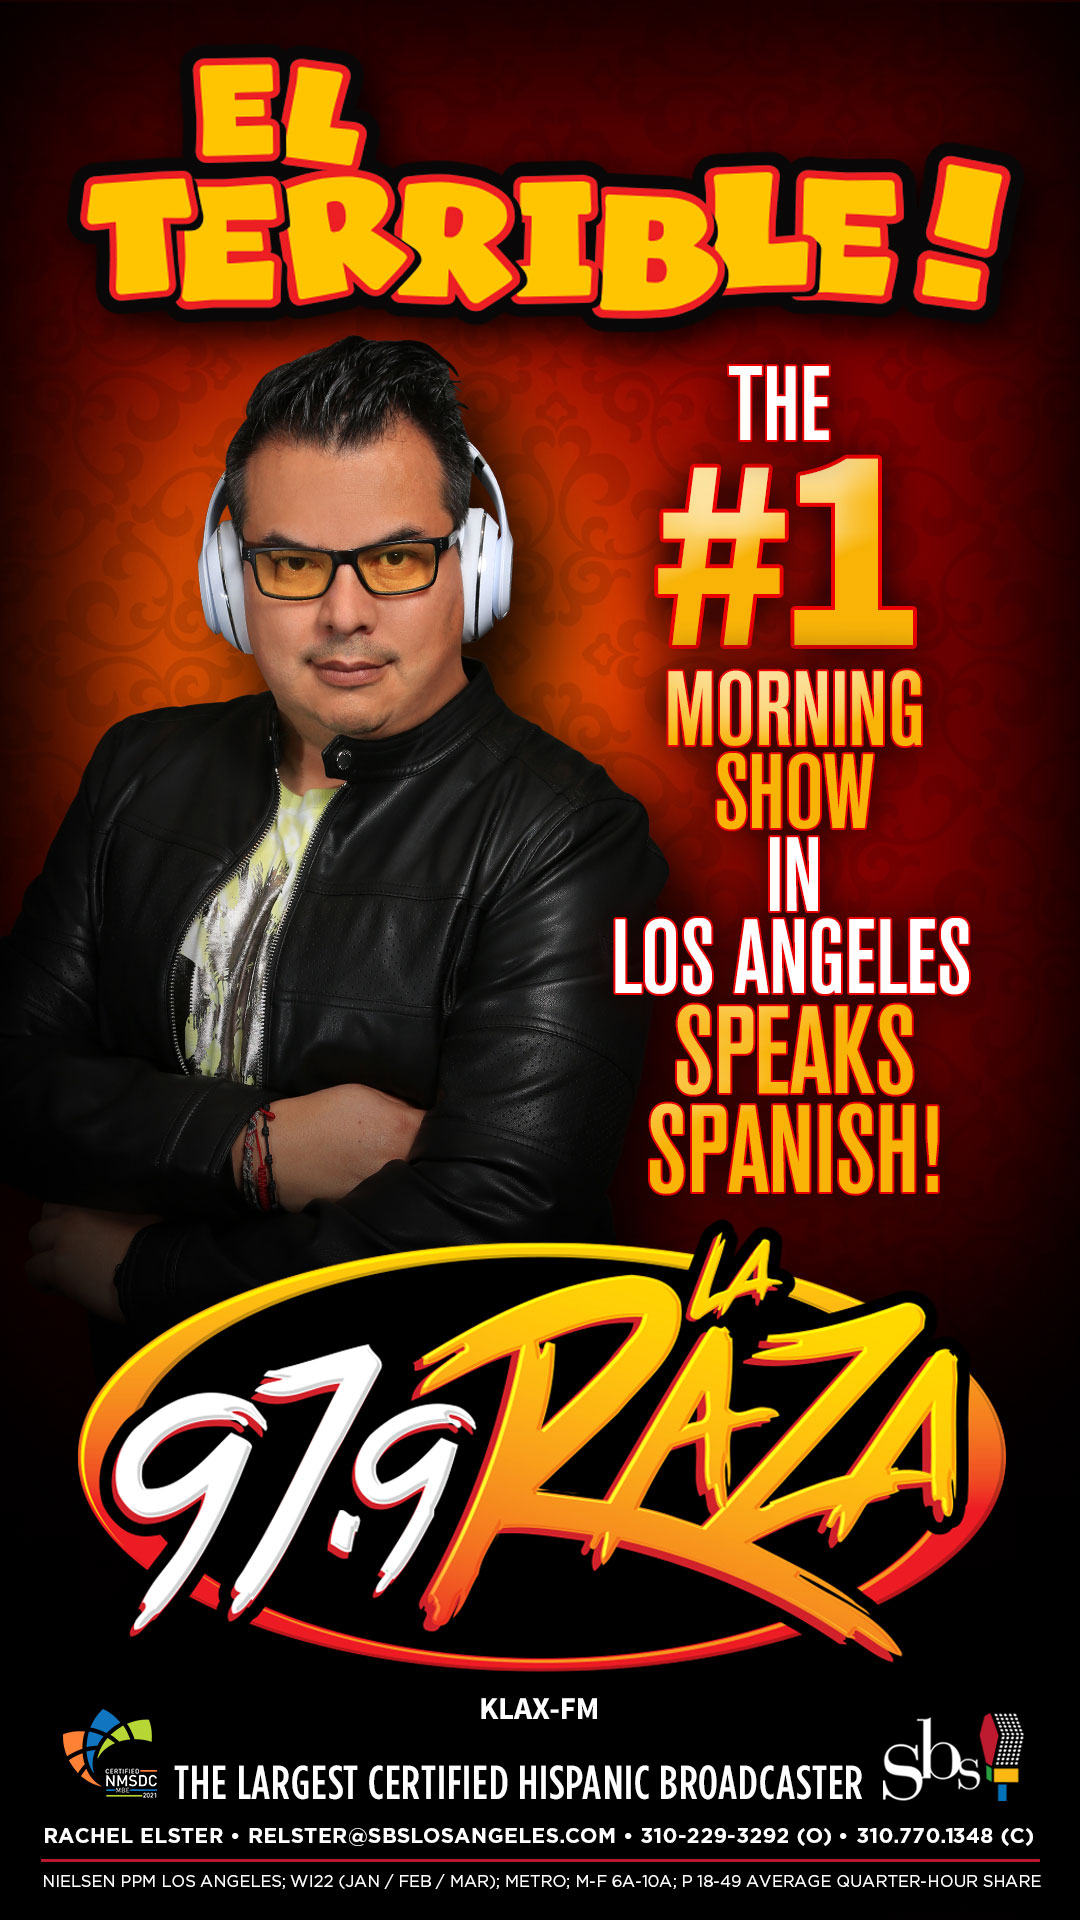 El Terrible! The #1 Morning Show in Los Angeles Speaks Spanish!